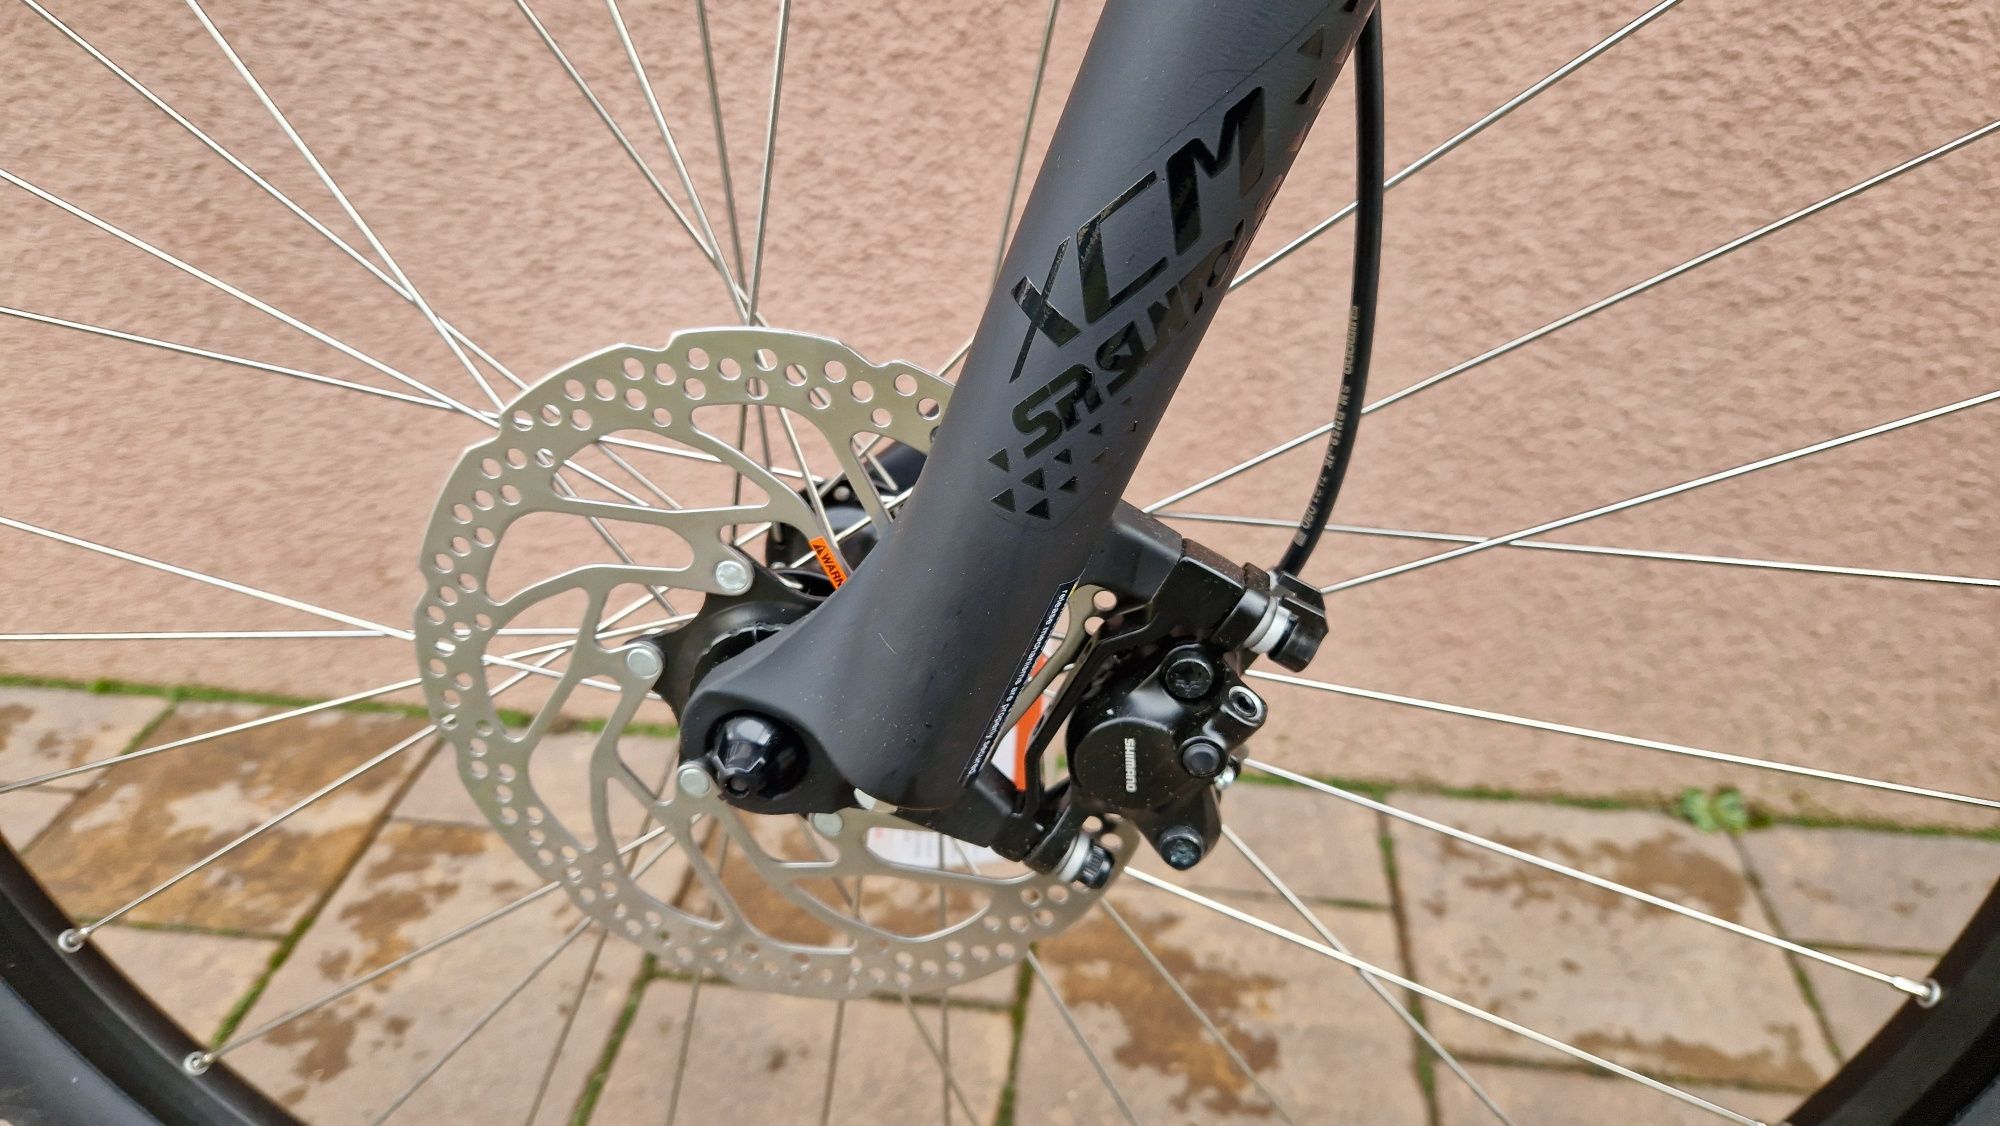 Nowy rower górski Stevens Tonga 2x9 Alivio Shimano hydraulika 18 cali